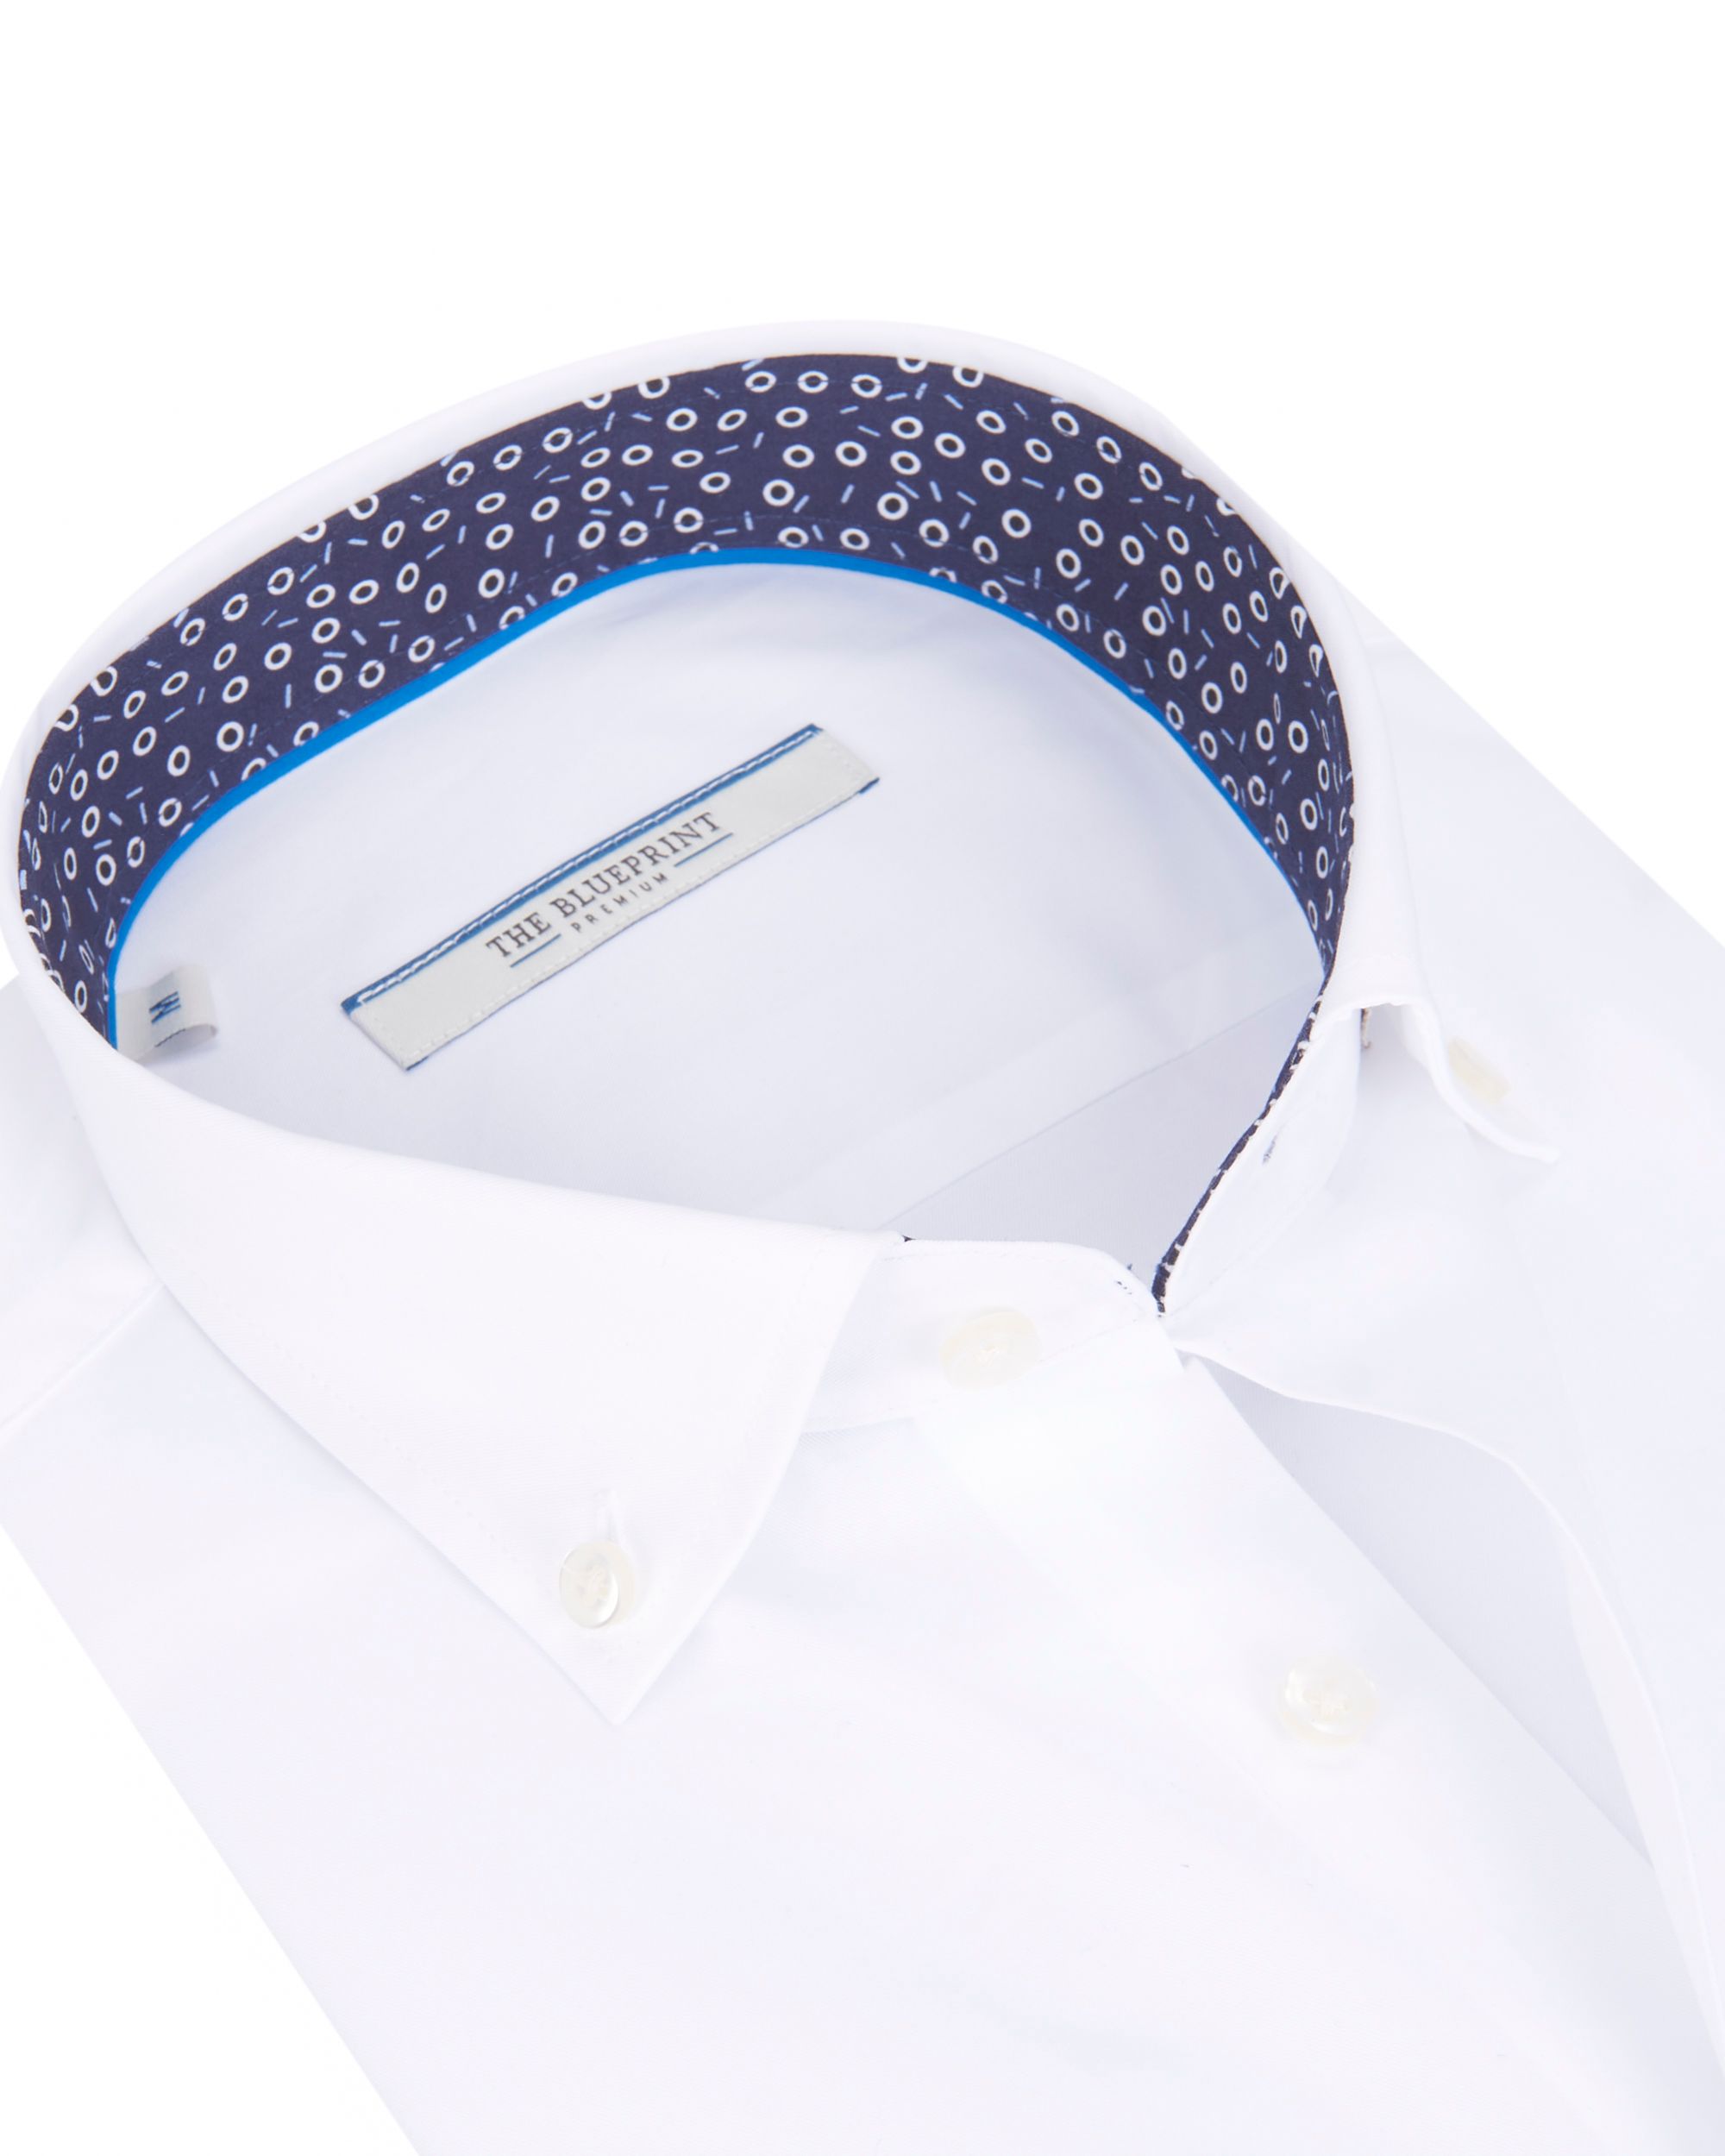 The Blueprint Premium - Trendy overhemd LM WHITE 086596-001-L